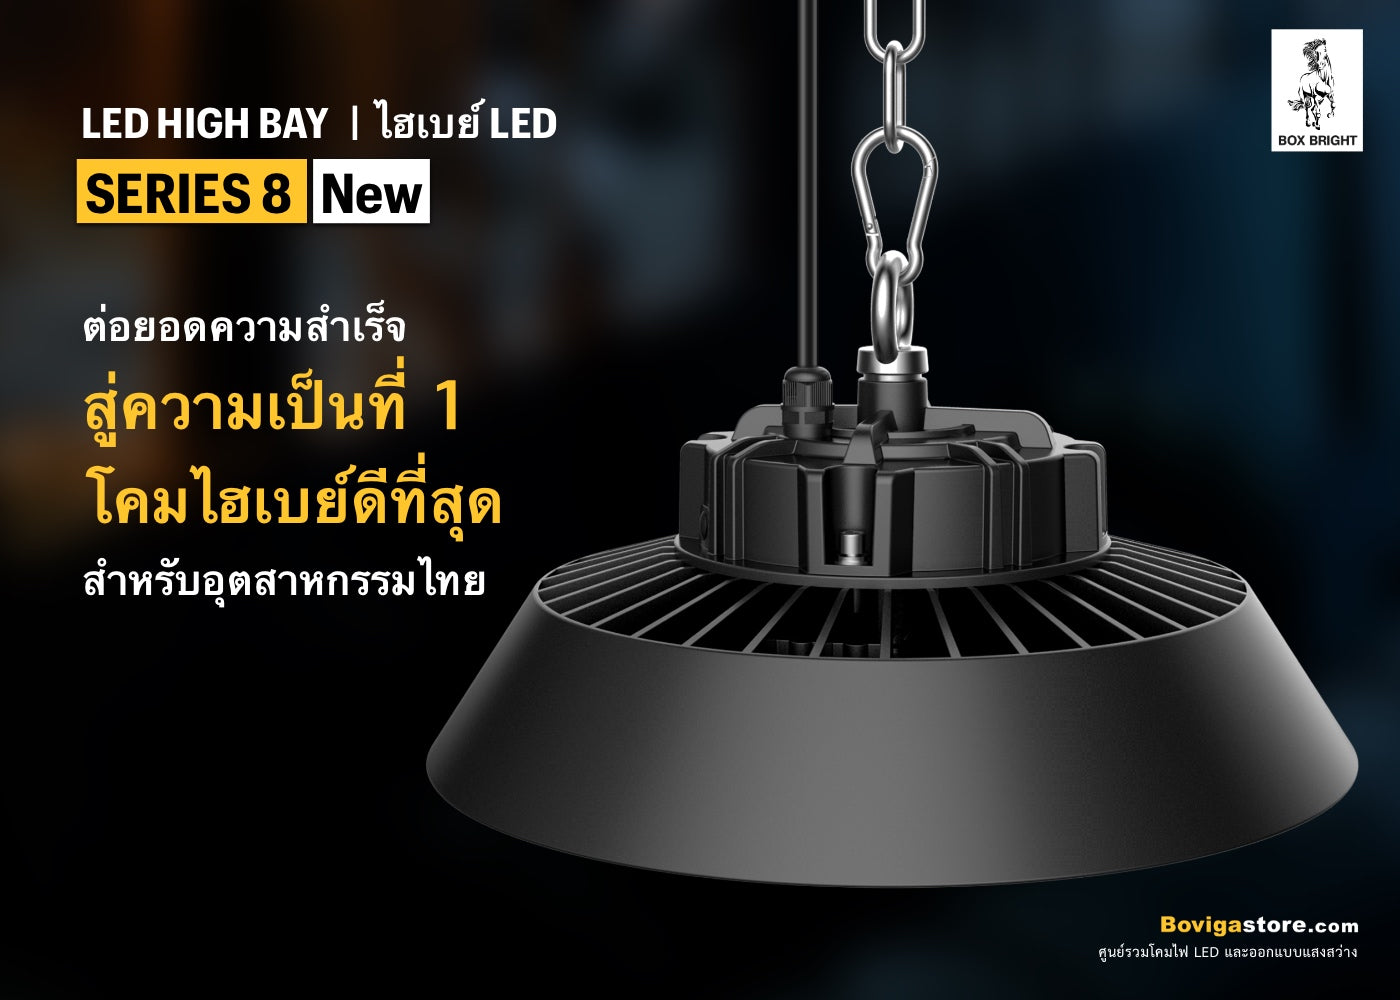 LED Highbay โคมไฟ ไฮเบย์ LED โคมไฟโรงงาน LED ที่ดีที่สุดสำหรับทุกอุตสาหกรรม รุ่นใหม่ล่าสุด Series 8 แบรนด์  BOX BRIGHT